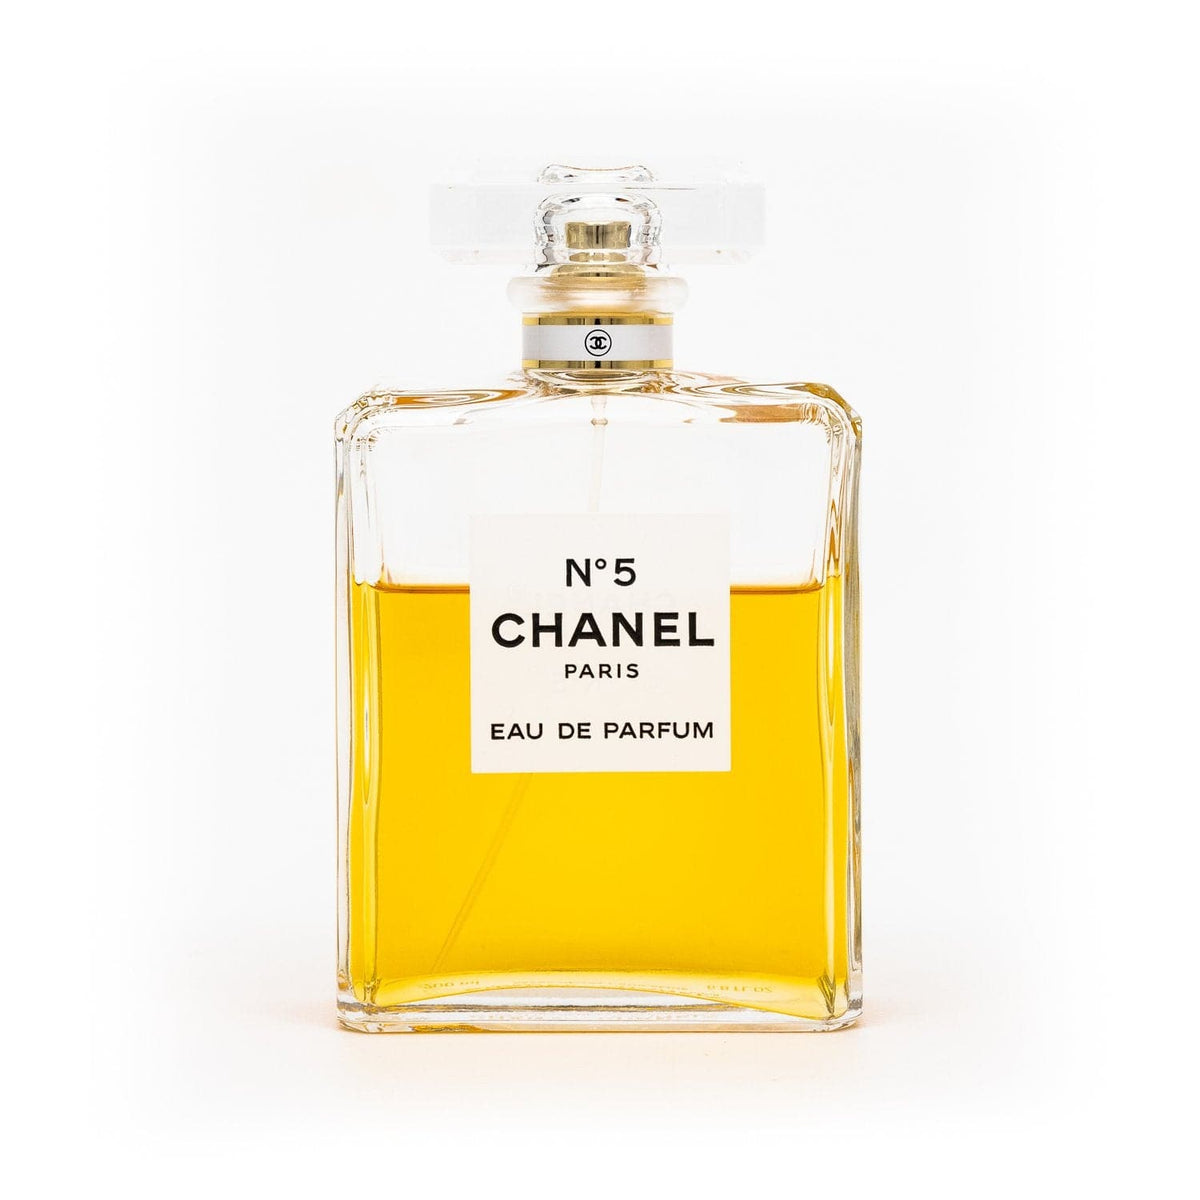 Chanel No.5 sample